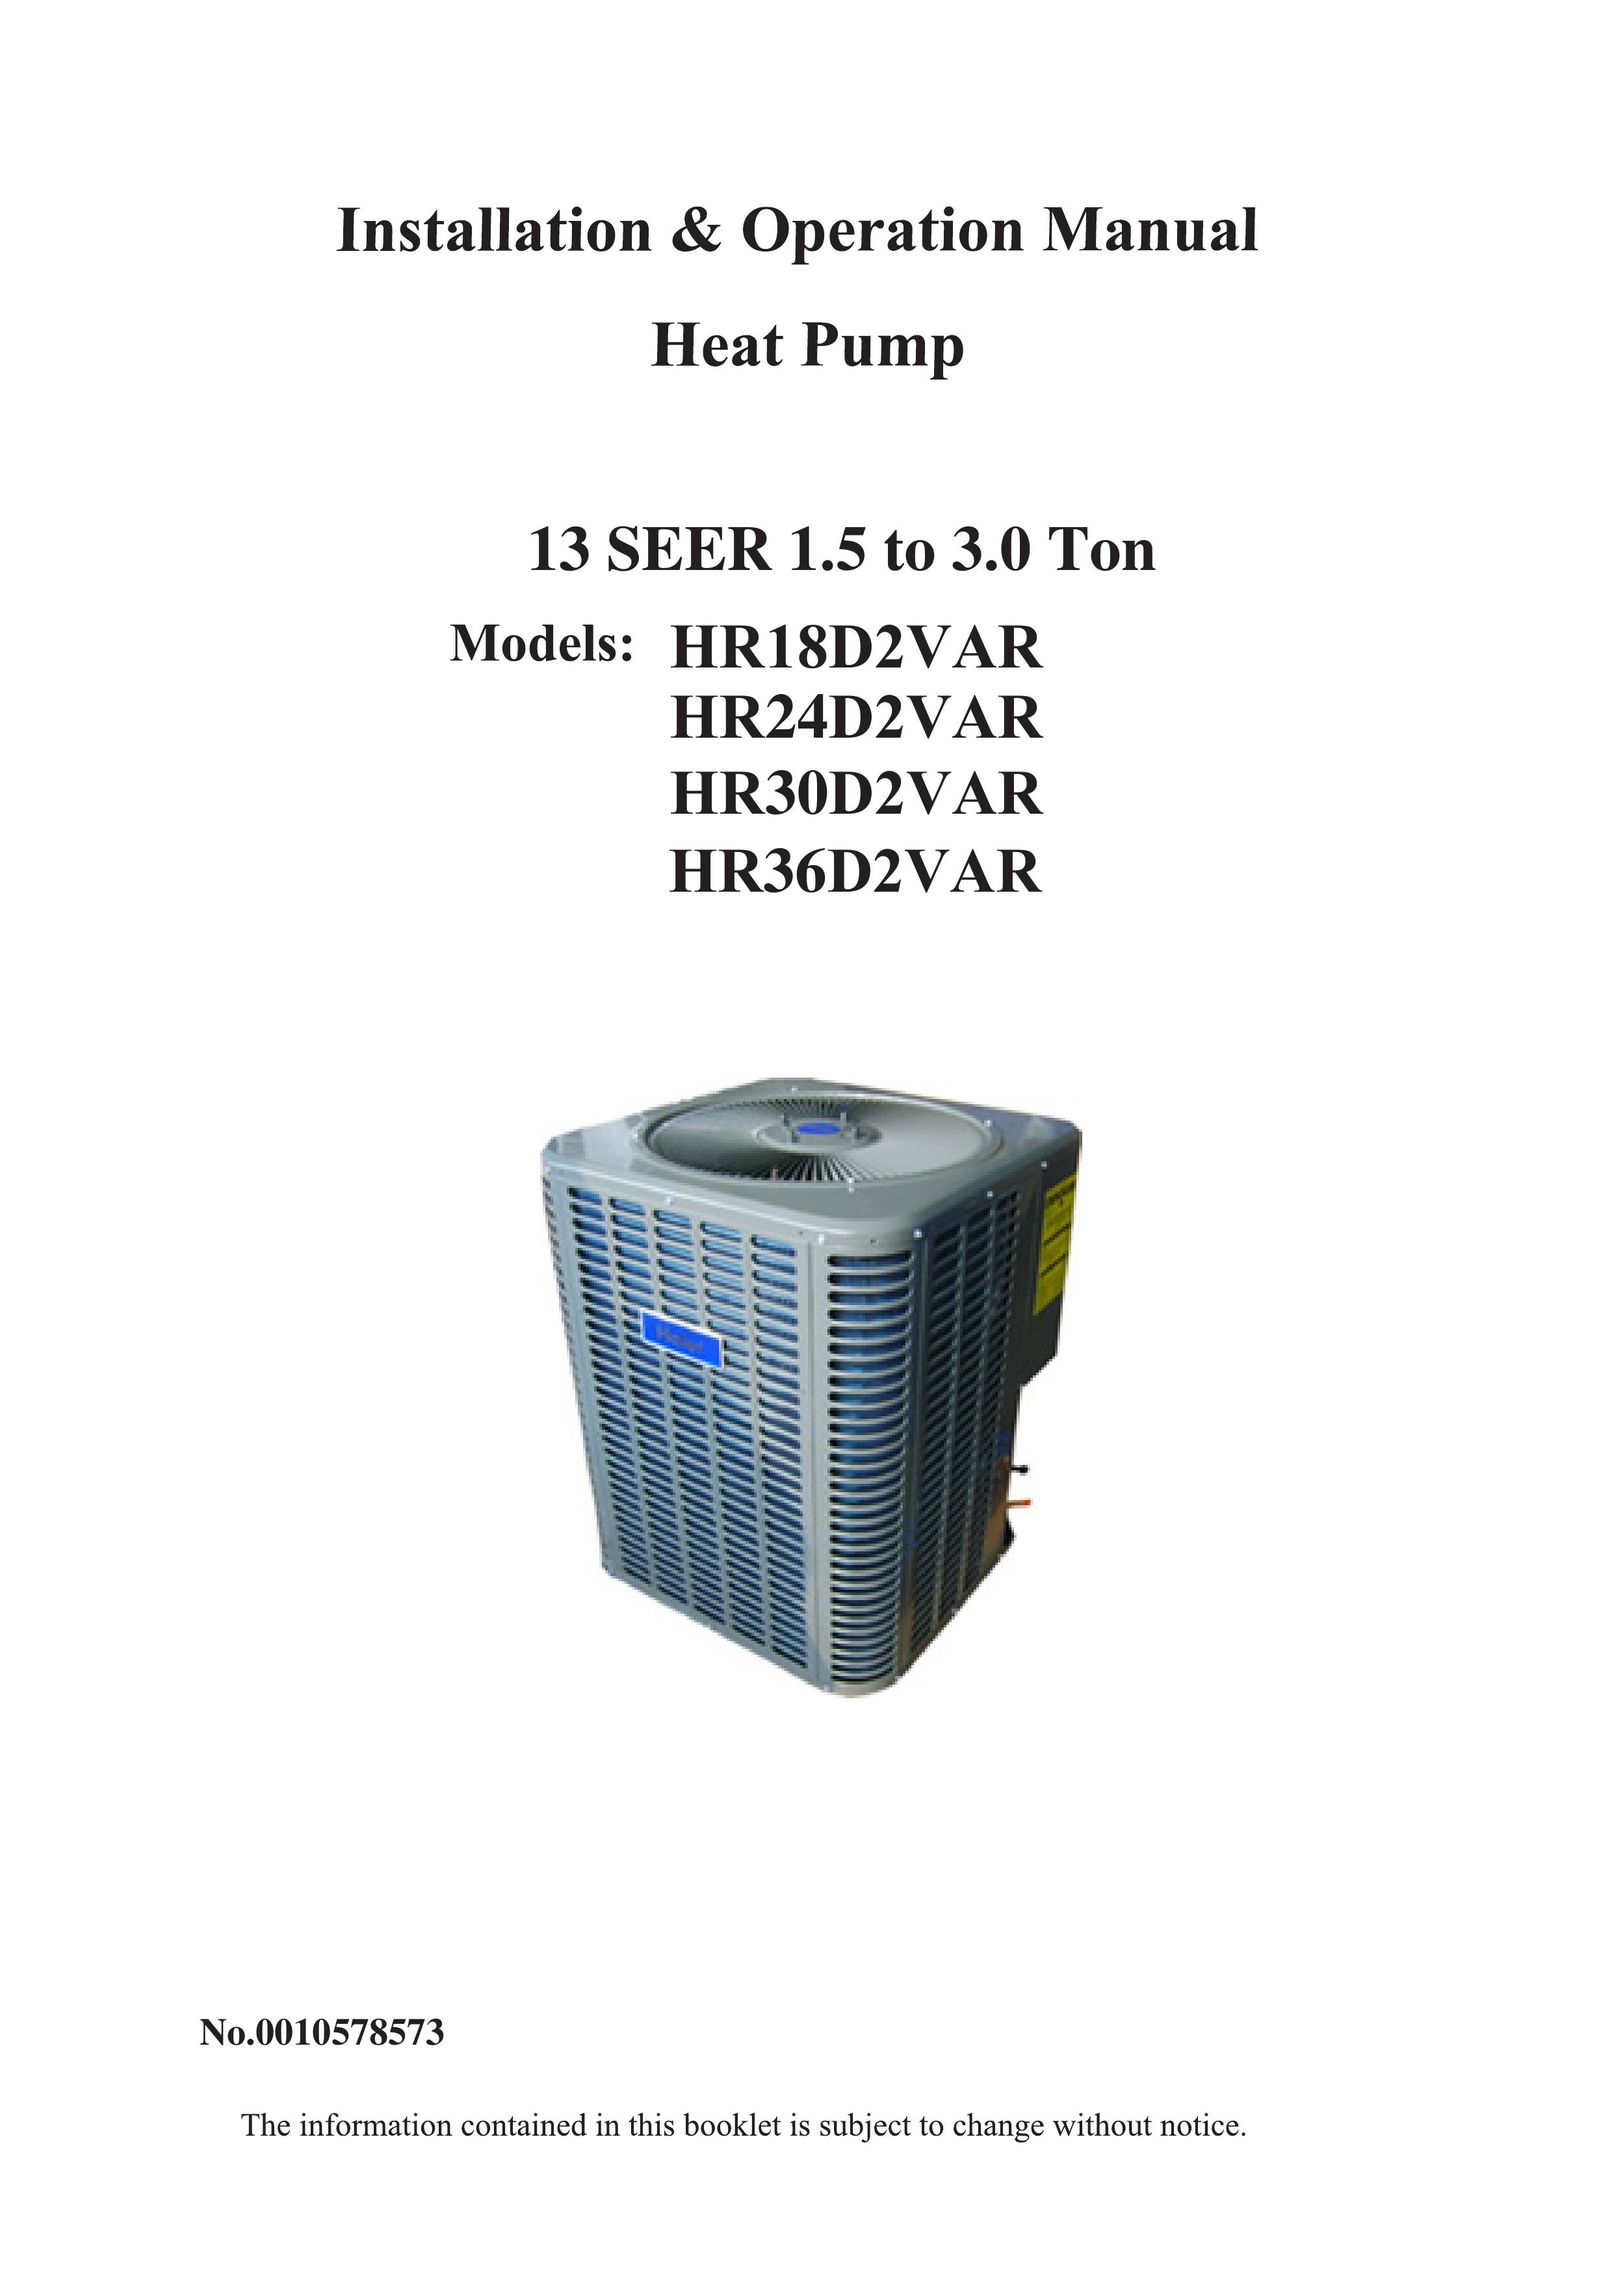 Haier HR30D2VAR Heat Pump User Manual